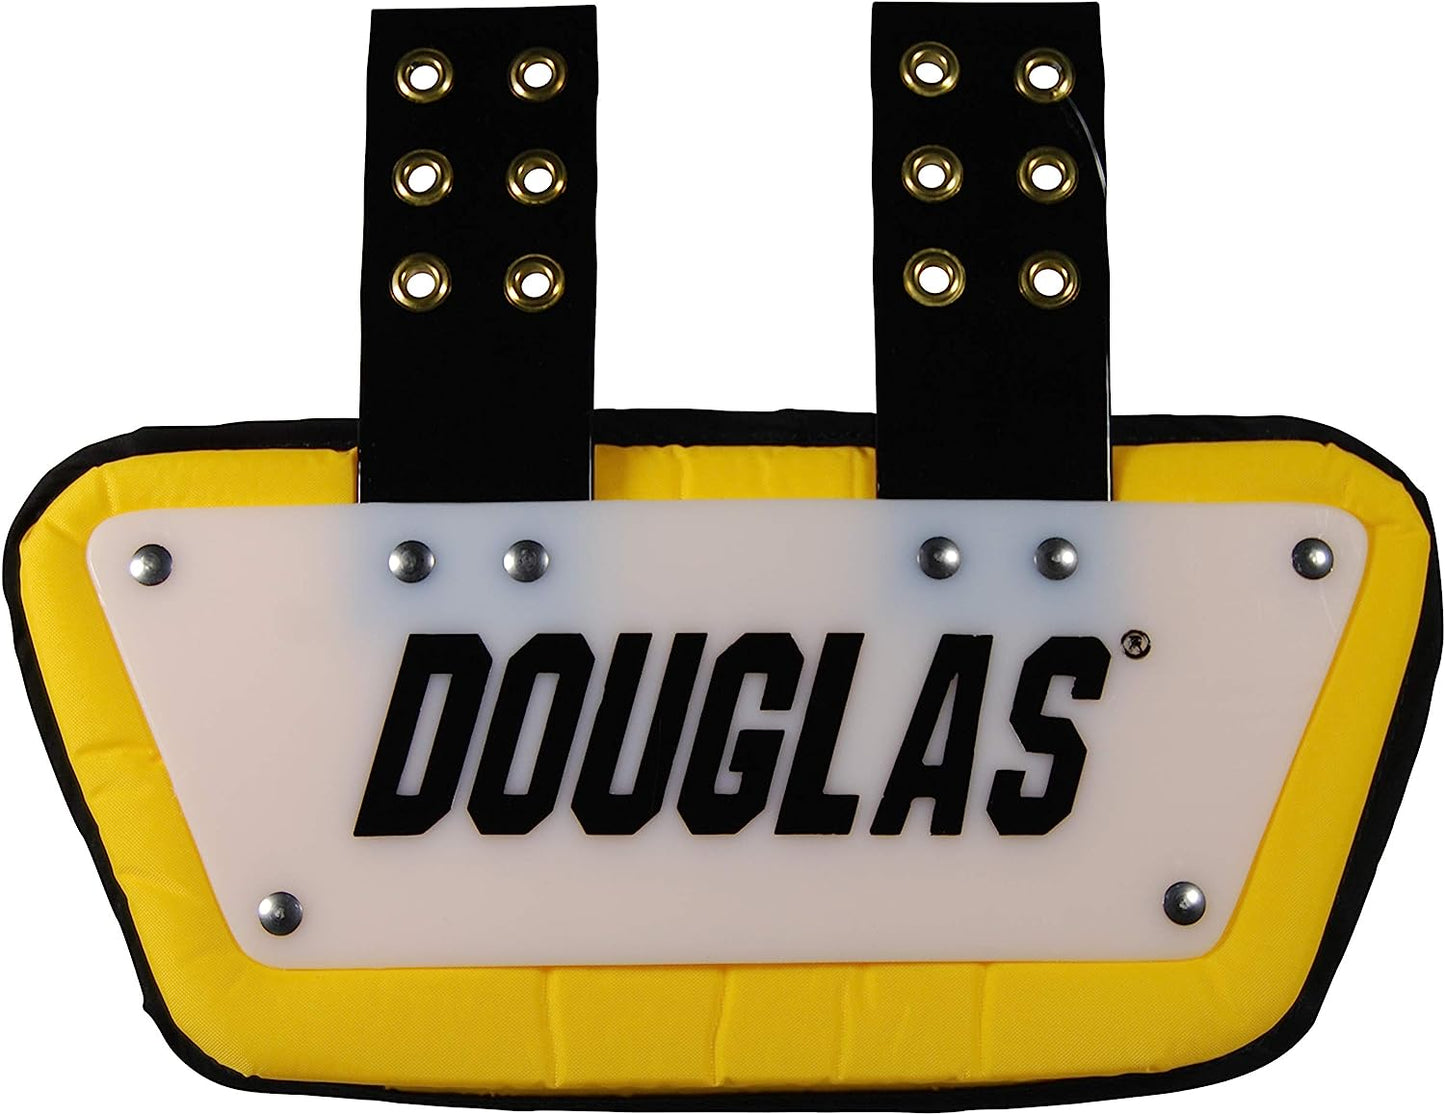 Douglas Removable 4 inch Back Plate